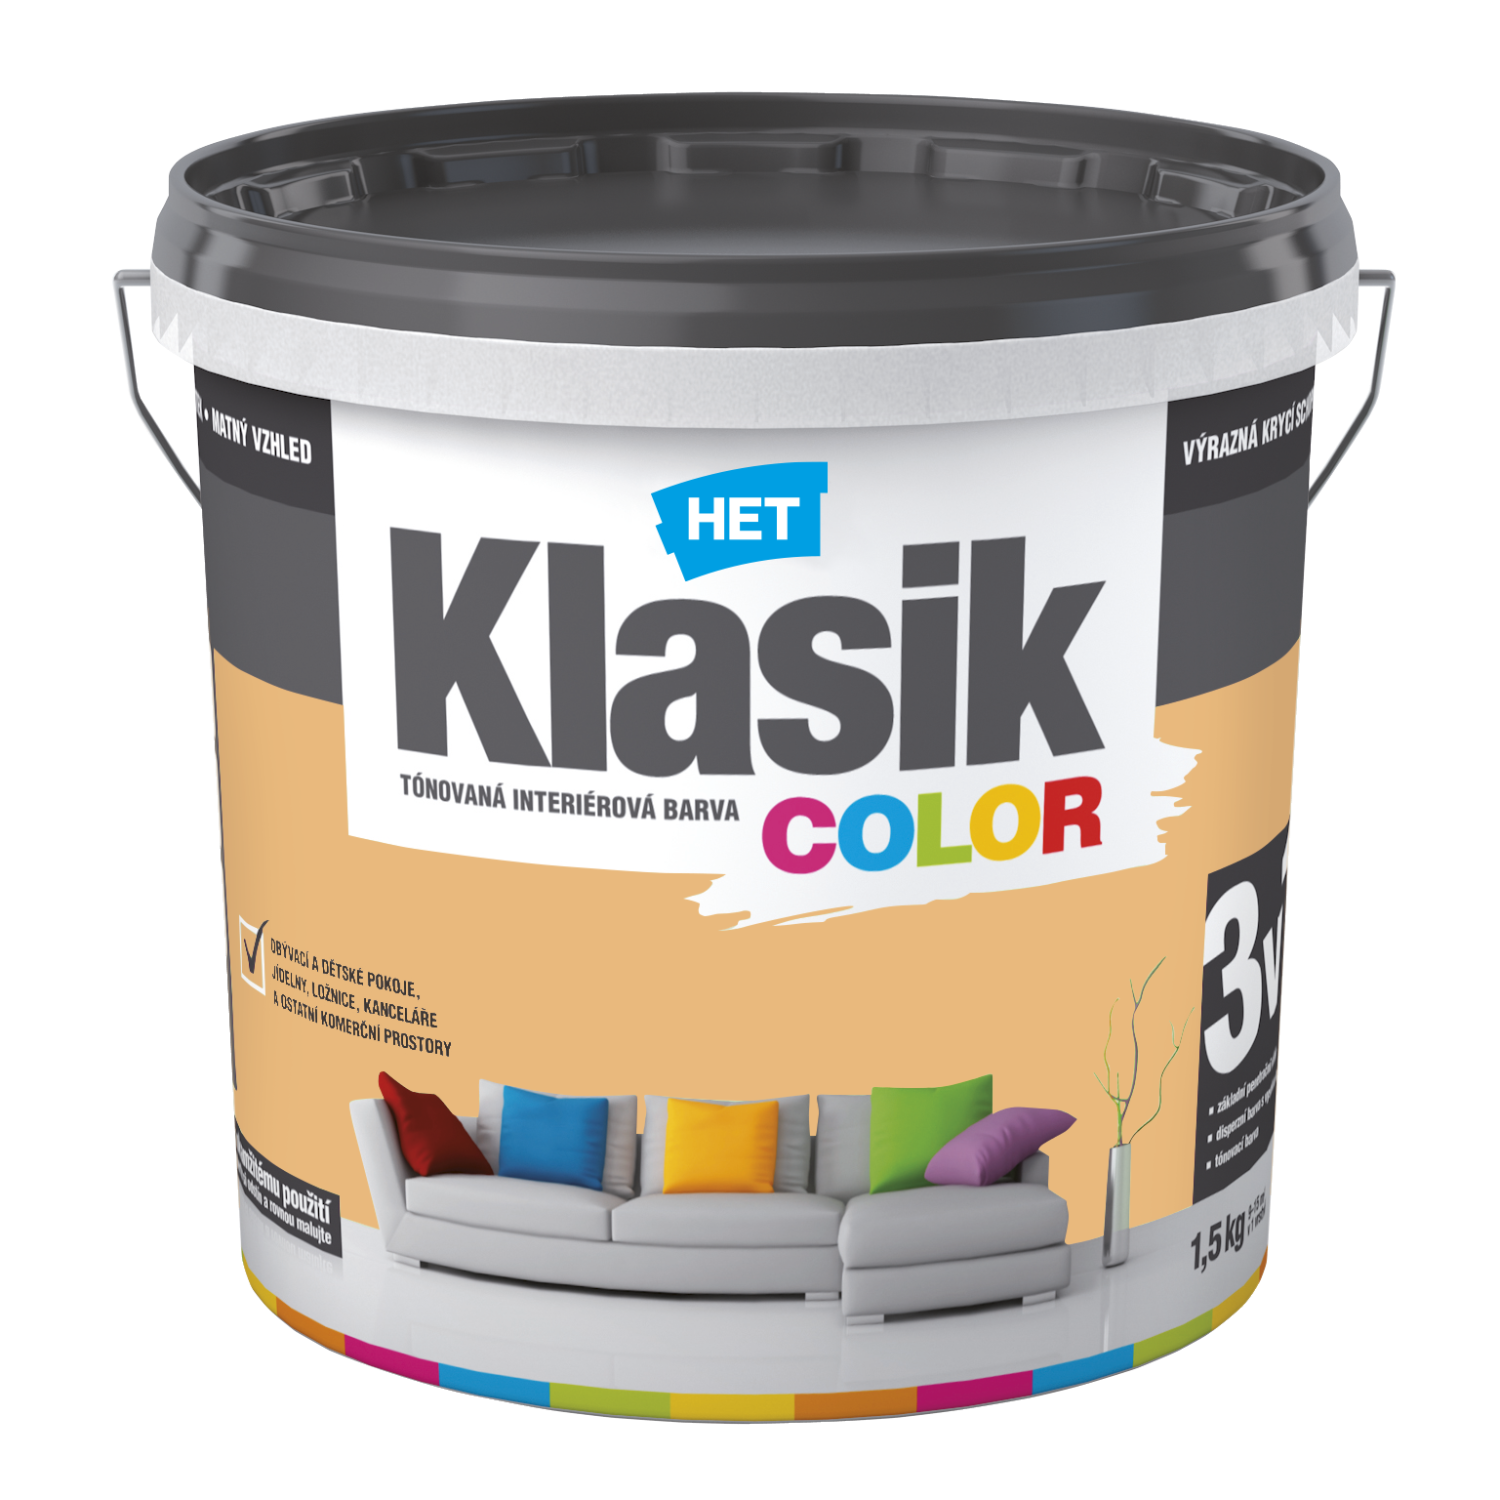 HET Klasik COLOR tónovaná interiérová akrylátová disperzná oteruvzdorná farba 1,5 kg, KC0777 - marhuľový